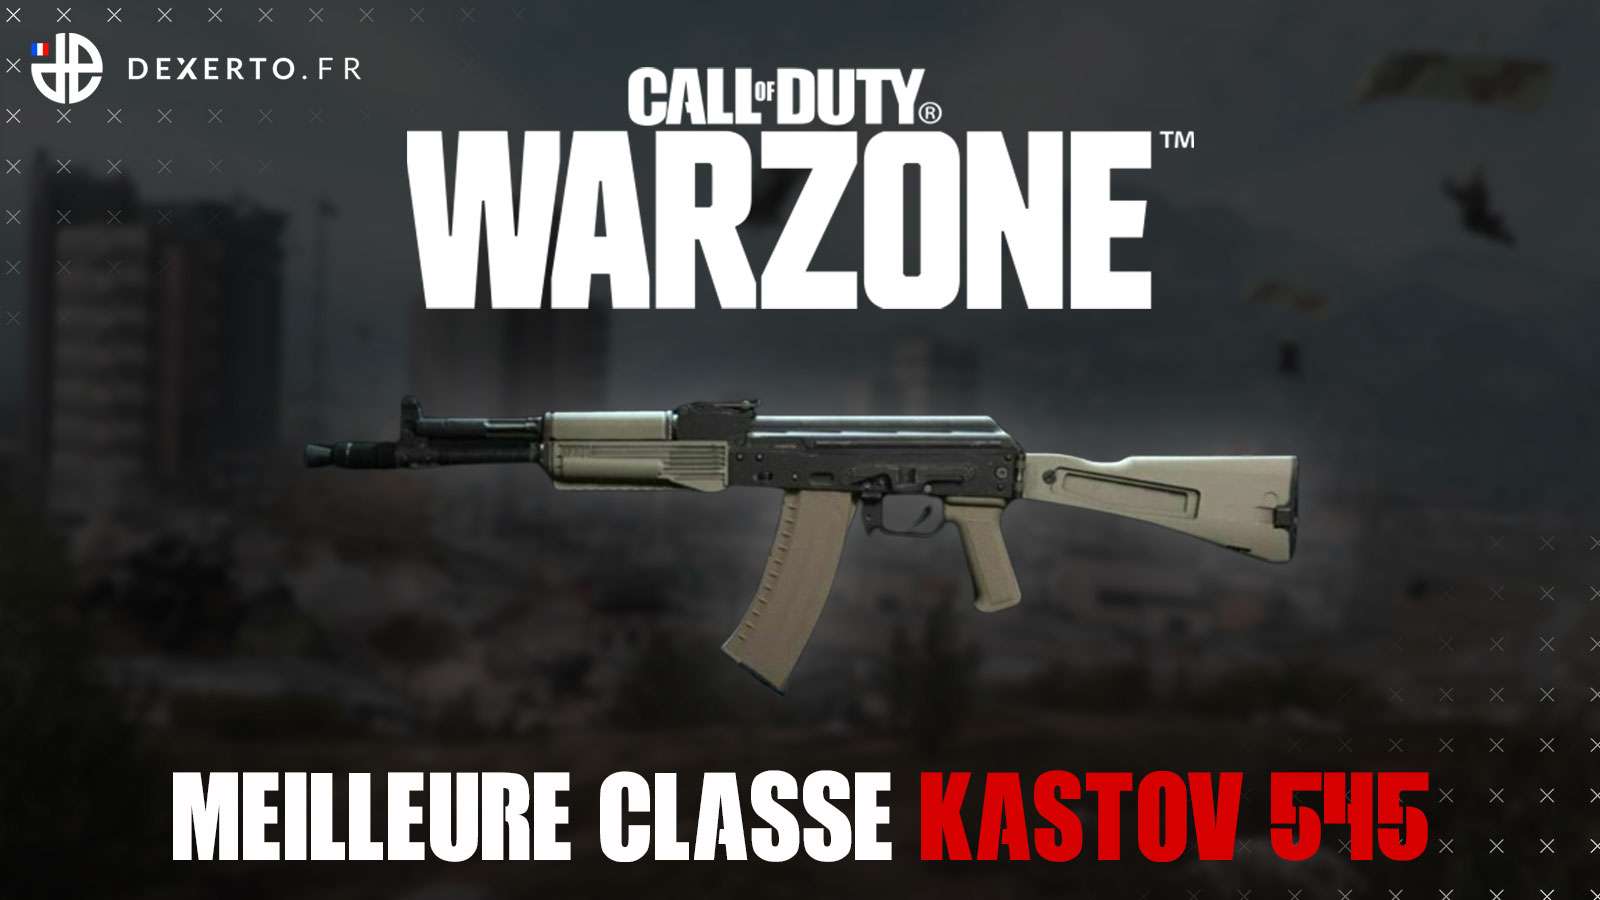 Warzone Kastov 545 meilleure classe